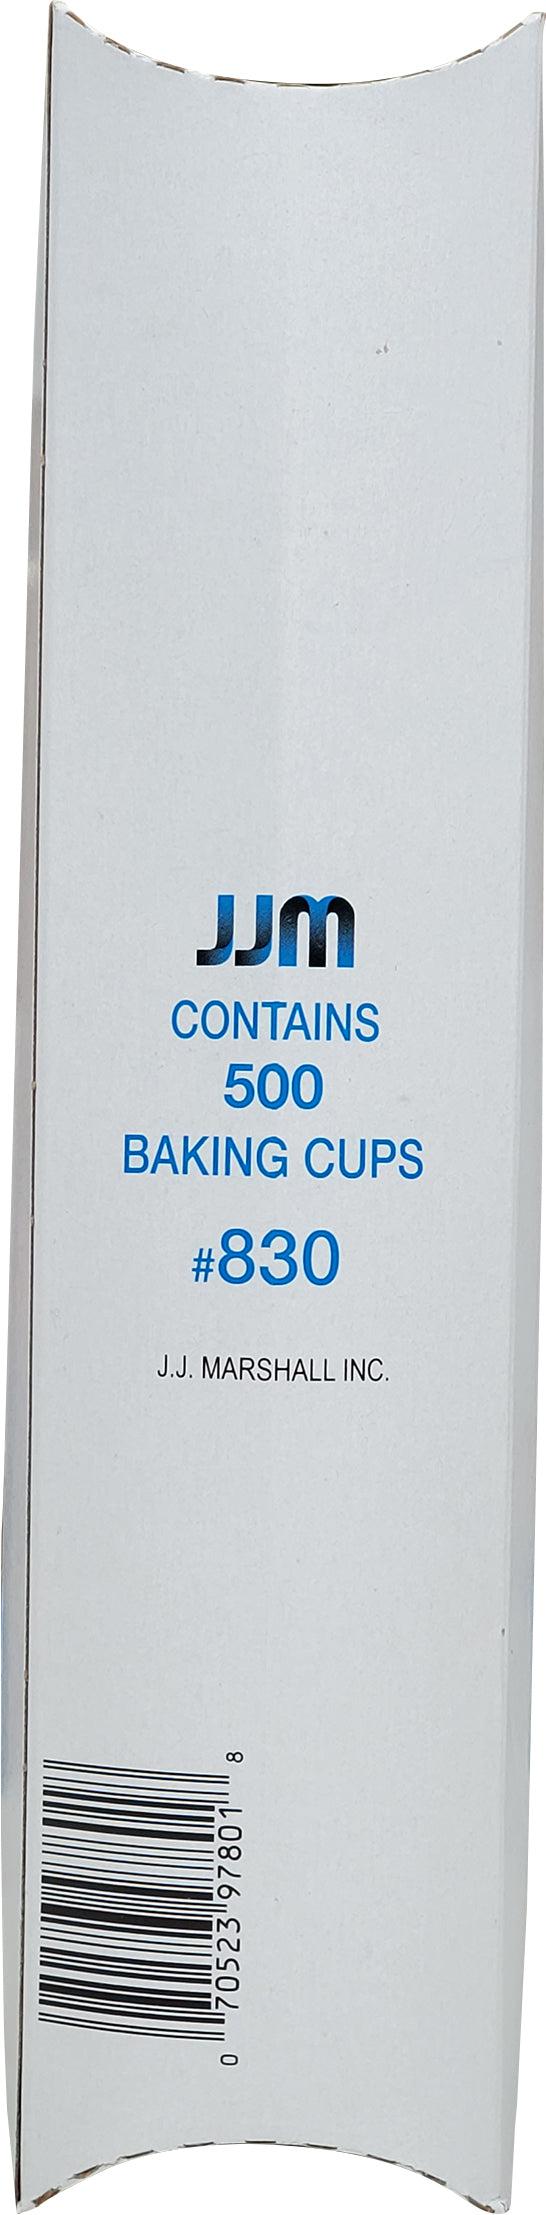 CLR - JJM - Baking Cup #830 - 10,000 Pcs